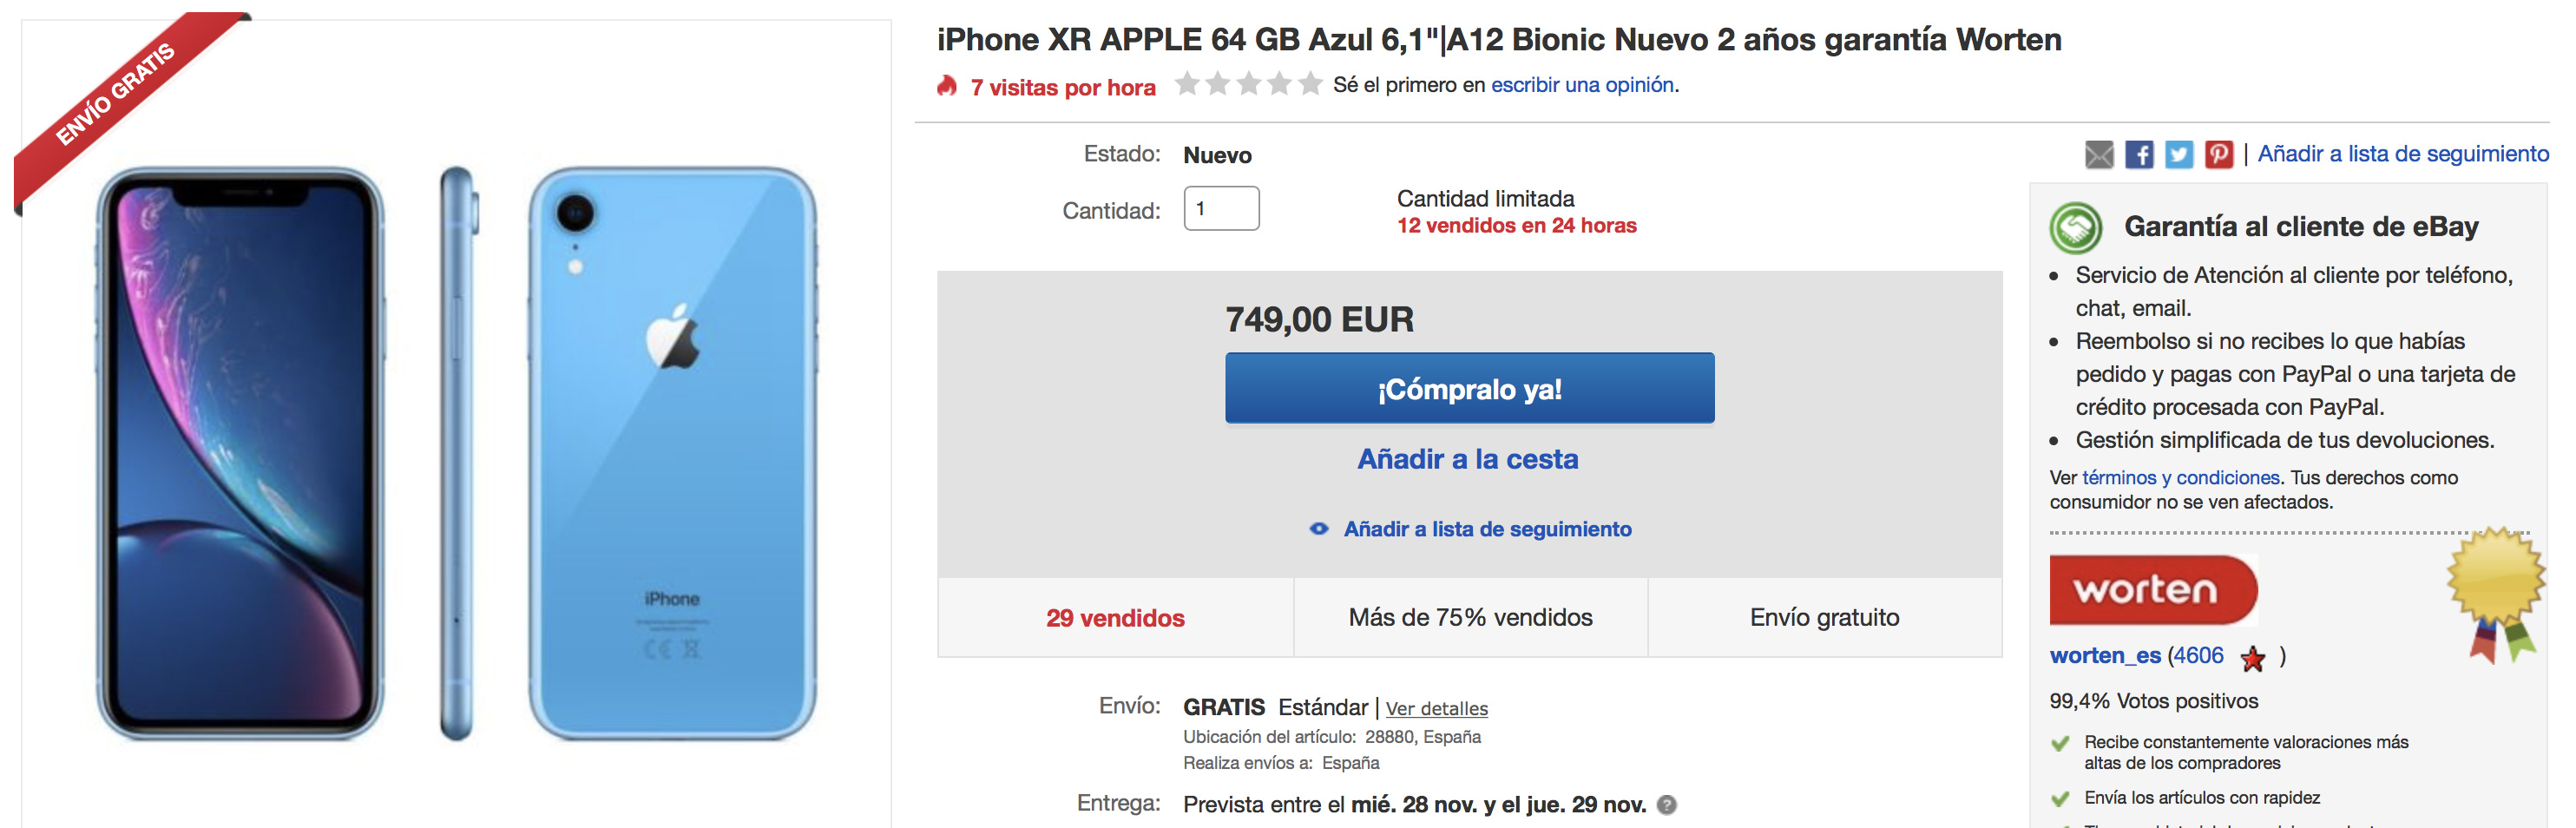 iPhone XR en eBay